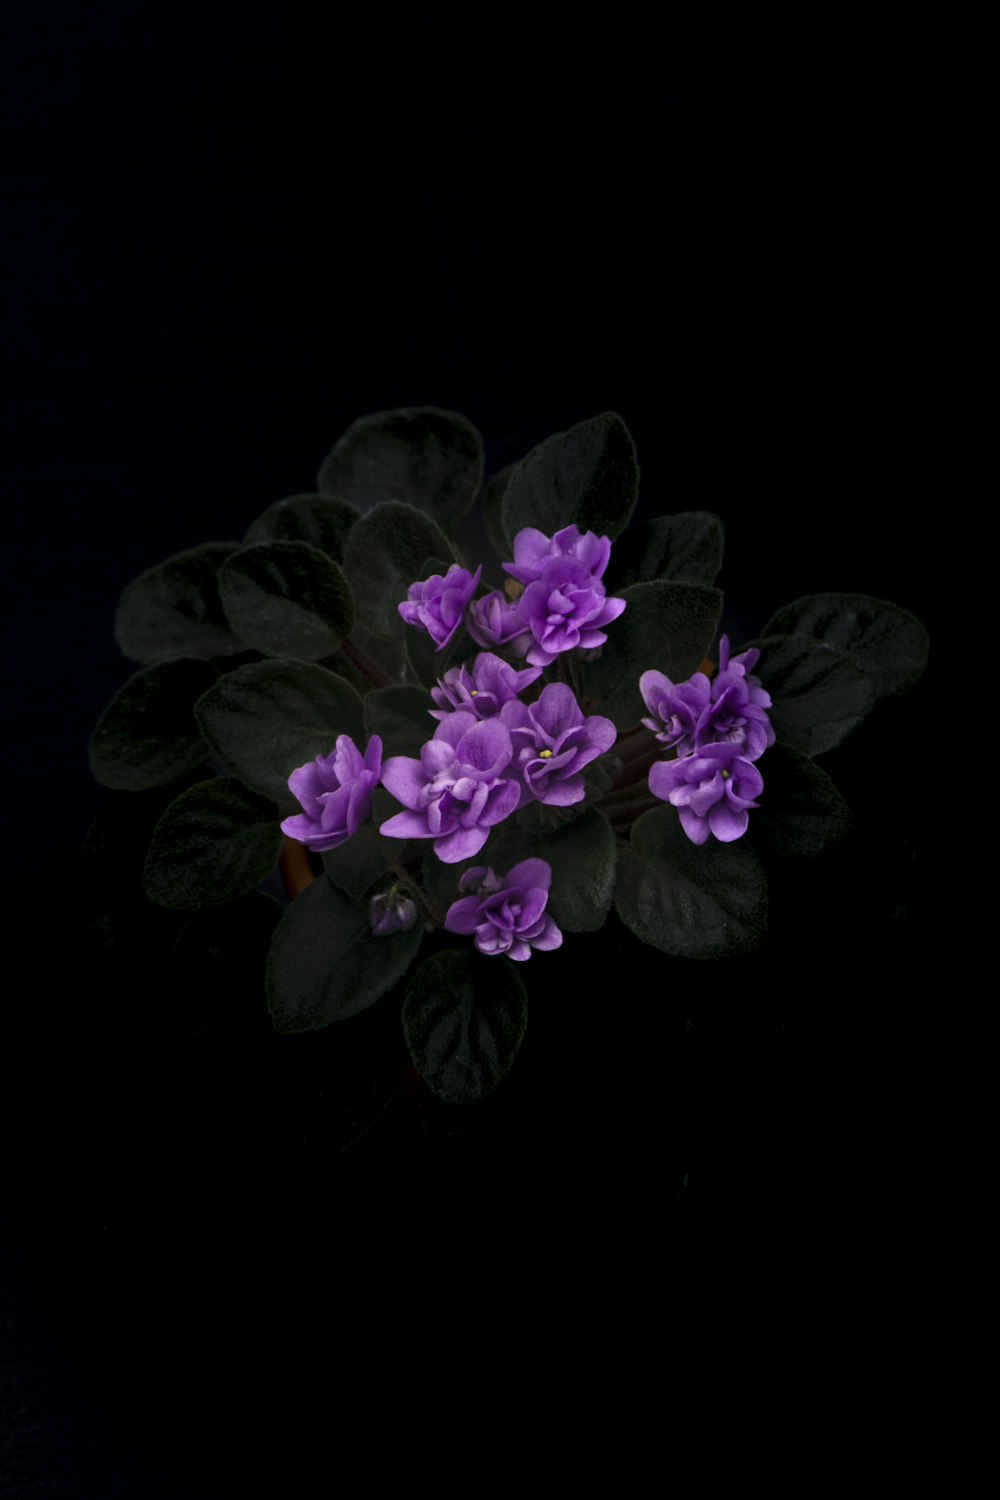 30,000+ Dark Flowers Pictures | Download Free Images on Unsplash